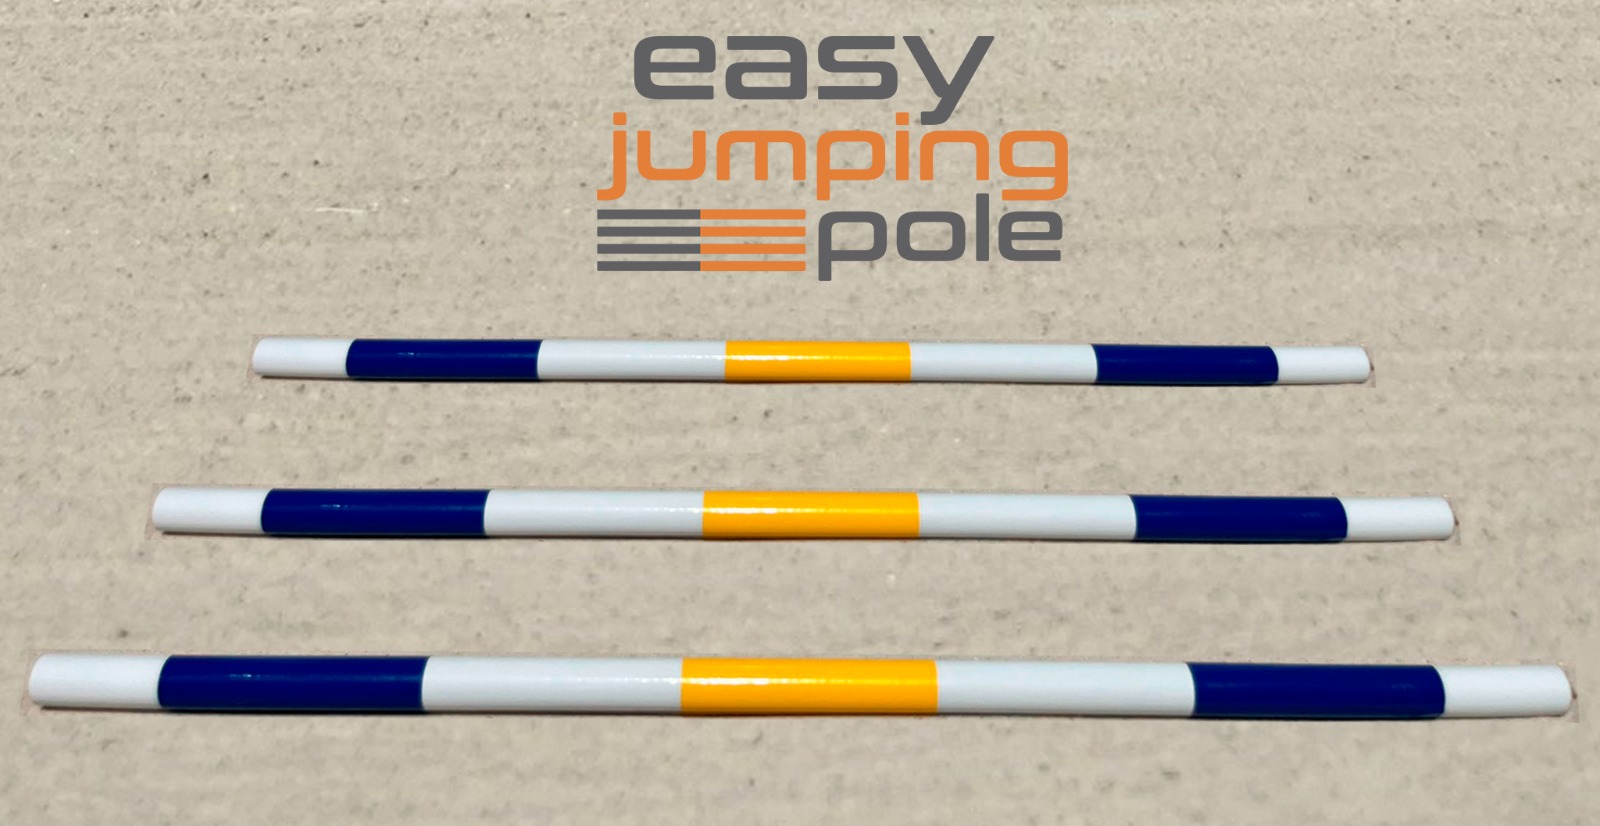 Easy jumping pole Model C-5